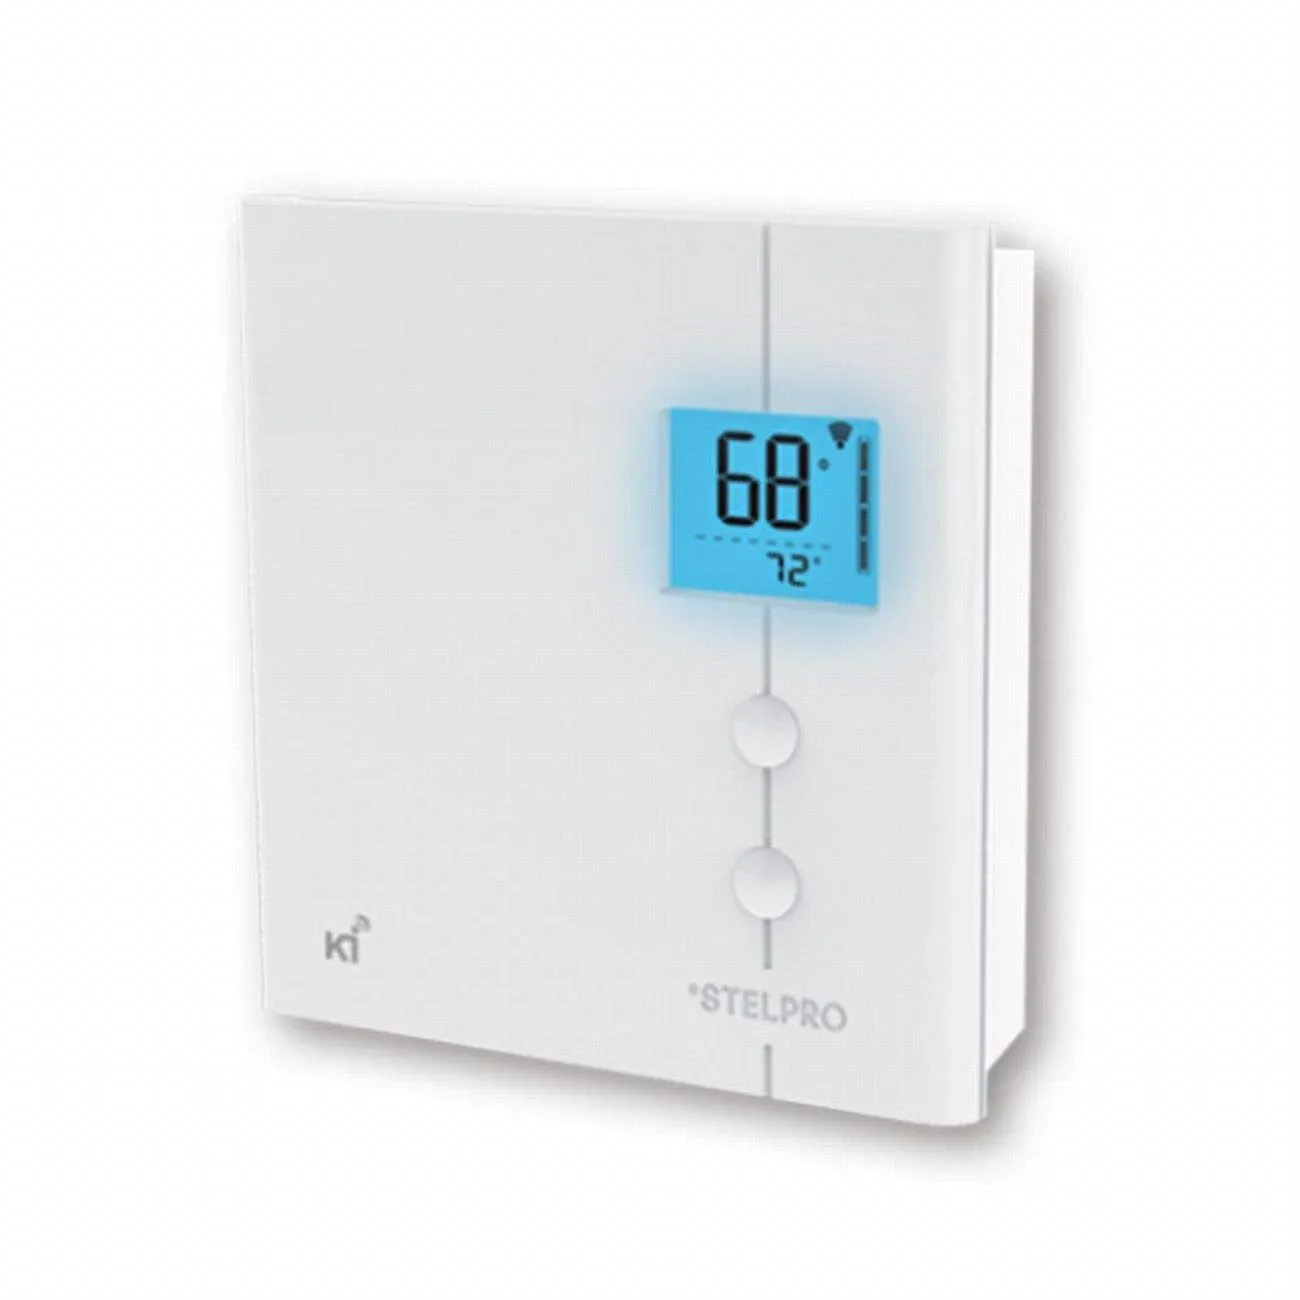 KI Electronic Thermostat